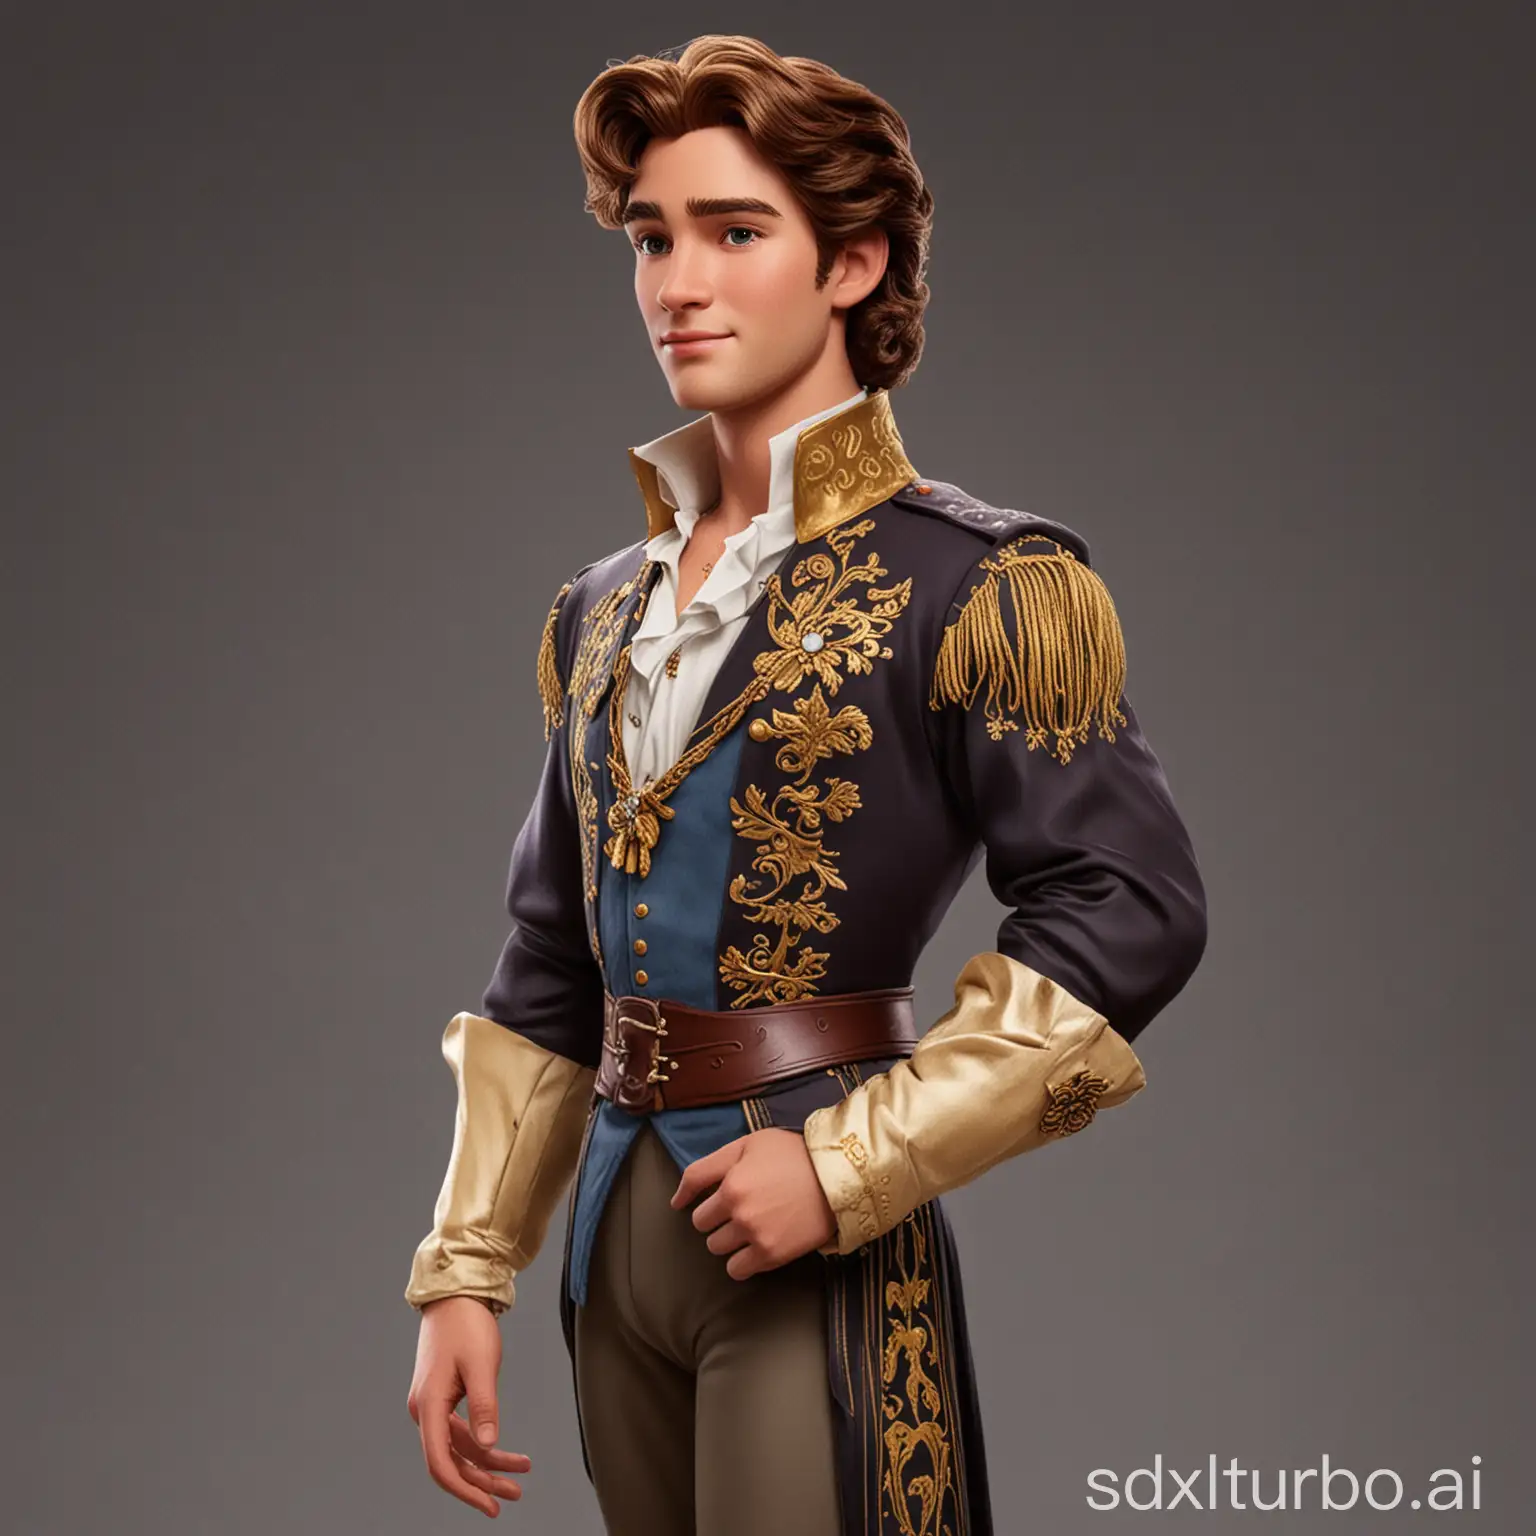 Charming-Disney-Prince-in-Majestic-Royal-Attire